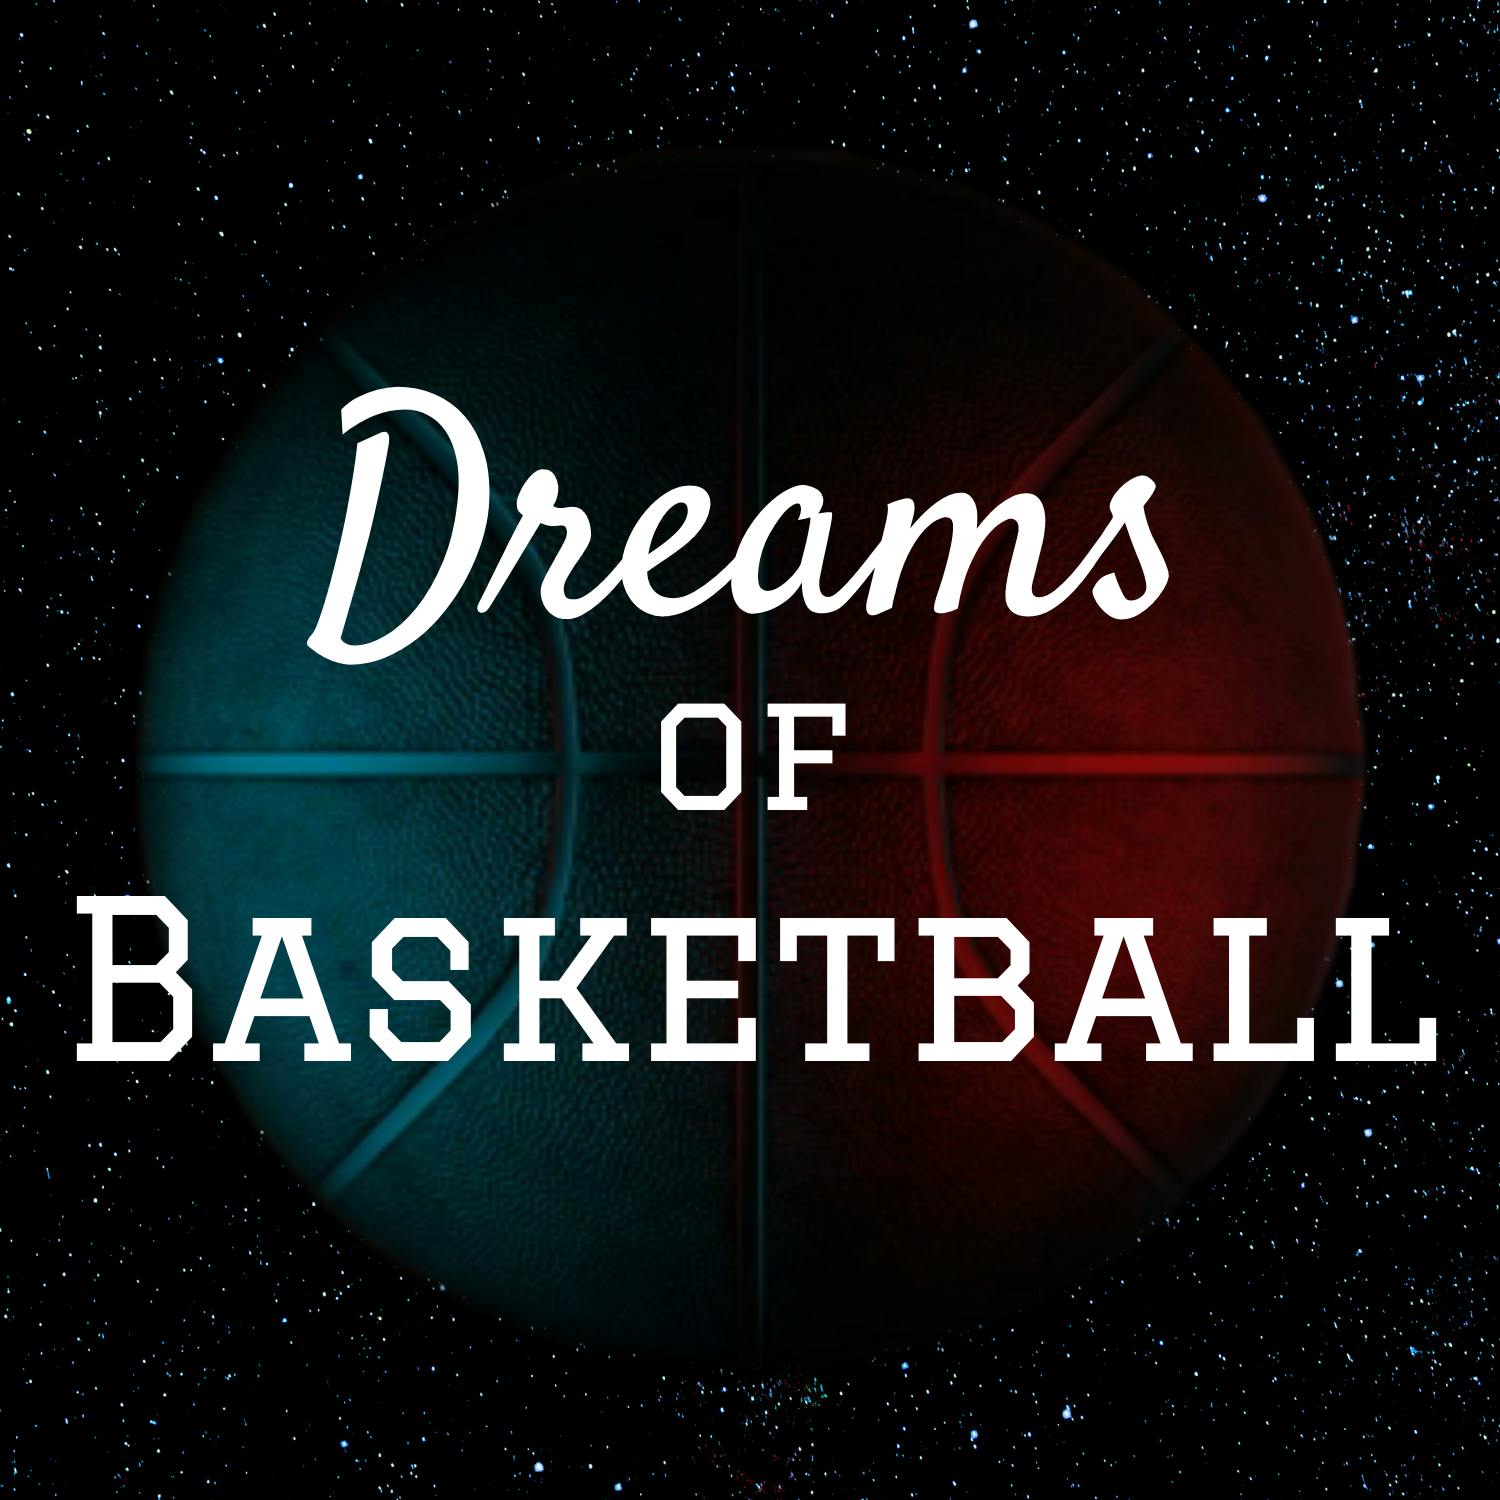 Dreams of Basketball